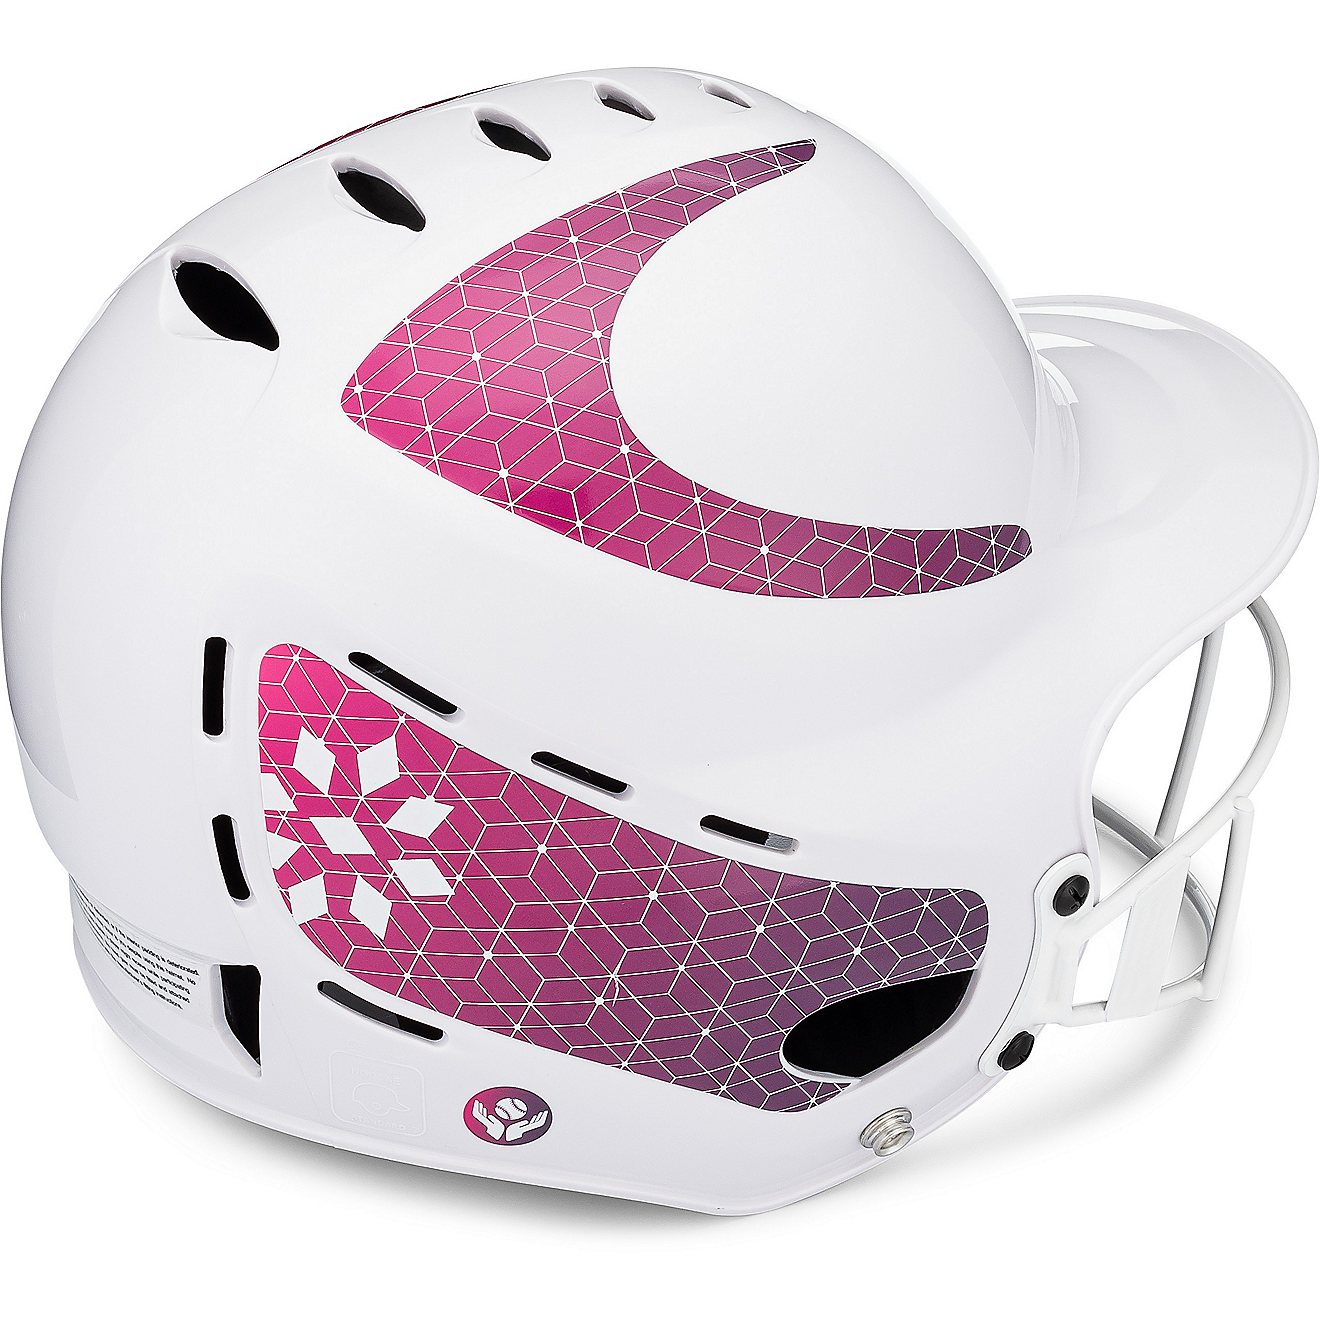 RIP-IT Women's Vision Classic 2.0 Softball Batting Helmet                                                                        - view number 2